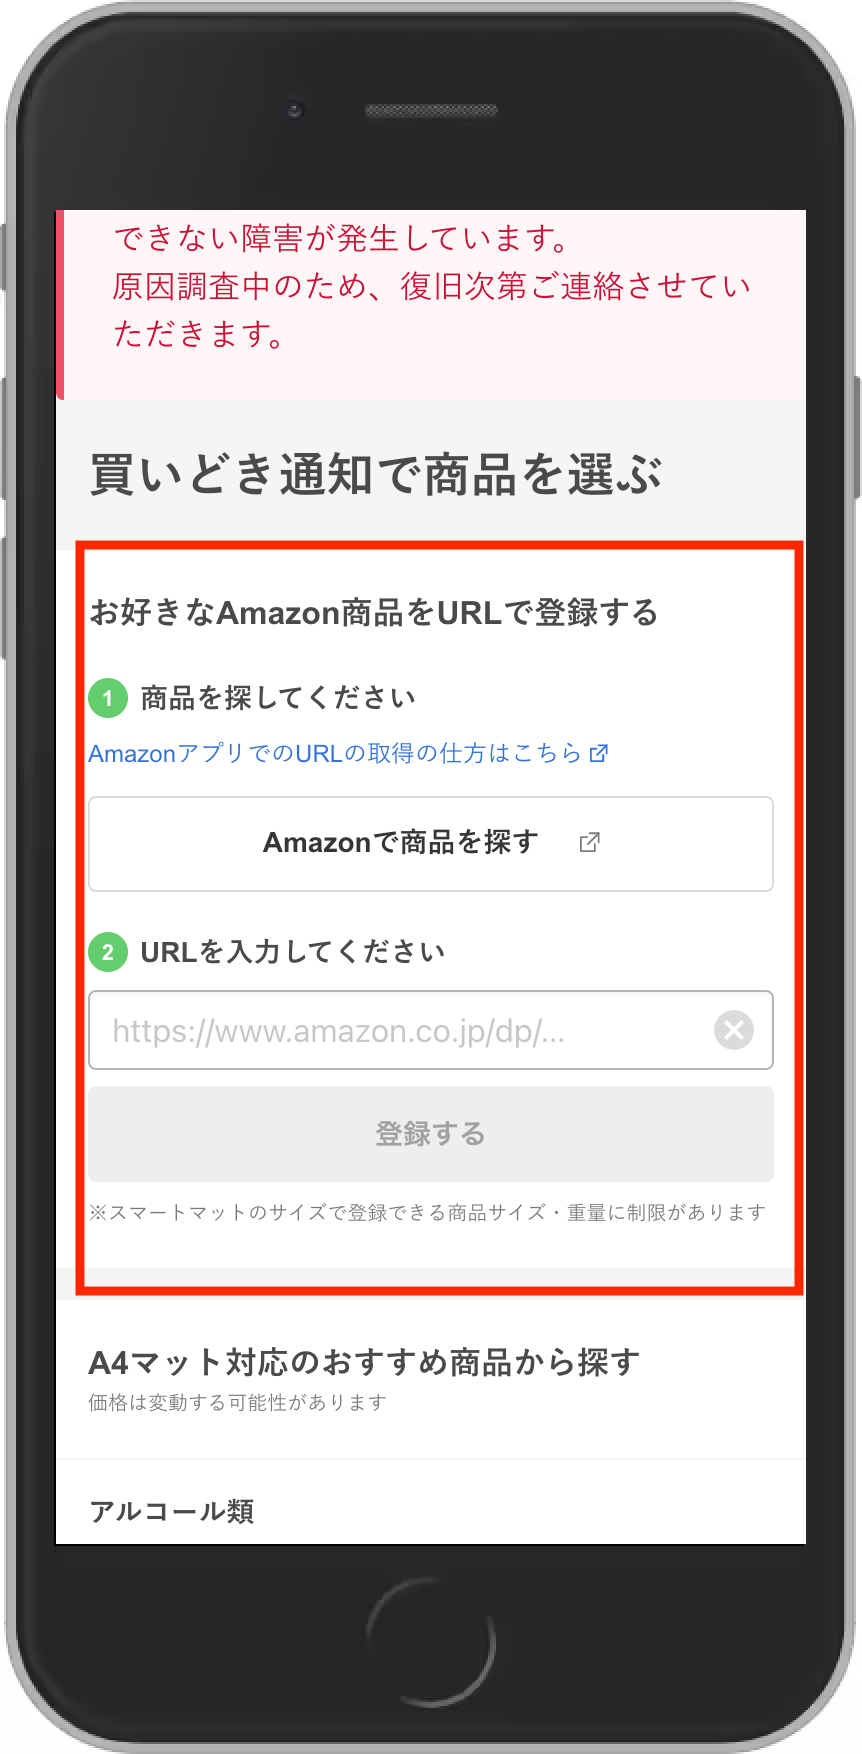 lite.smartmat.io subscription regist time to buy(iPhone 6 7 8)